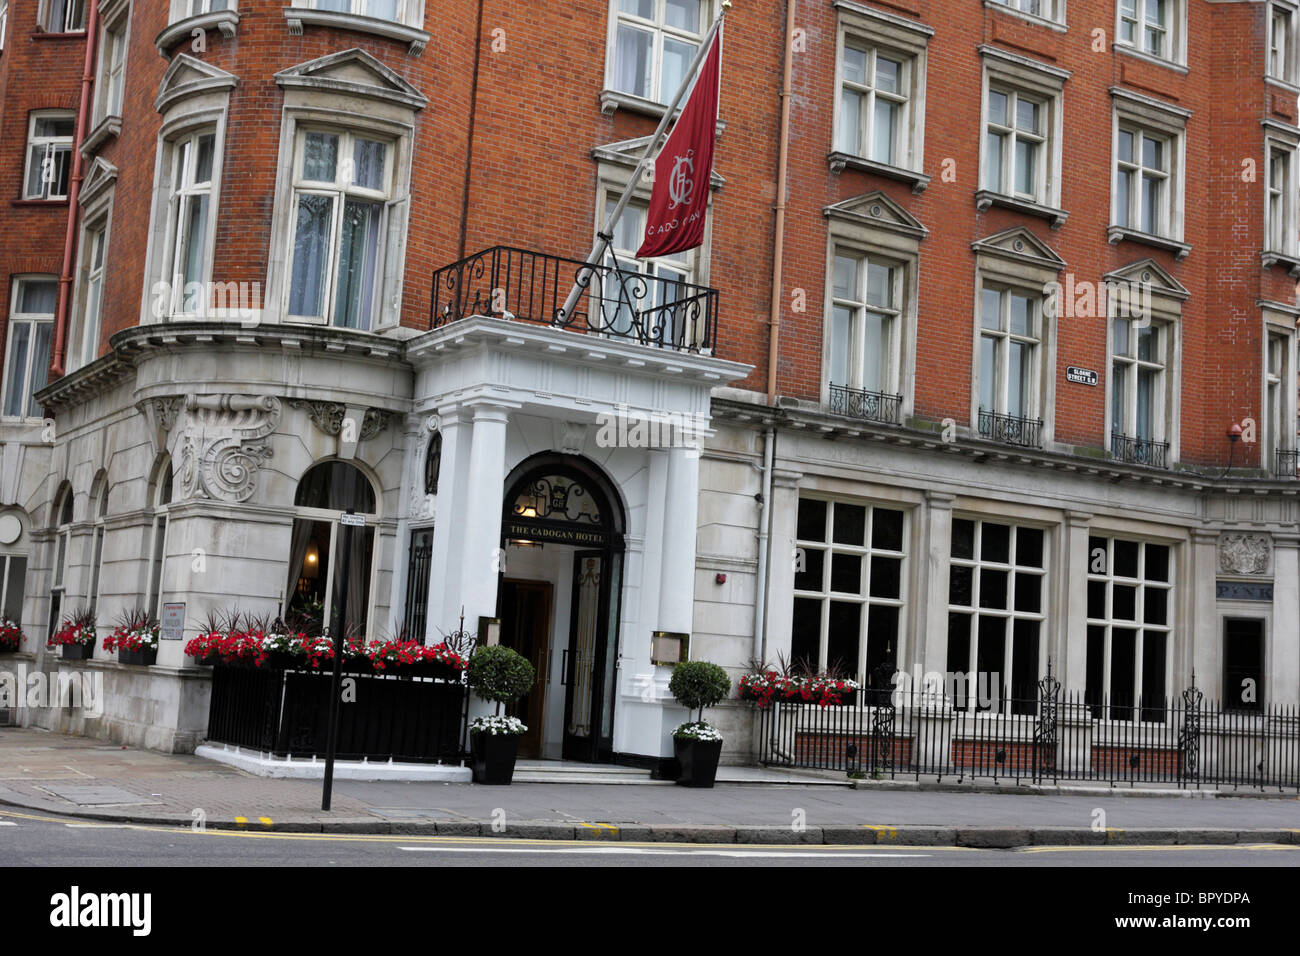 Belmond Cadogan Hotel - London, United Kingdom